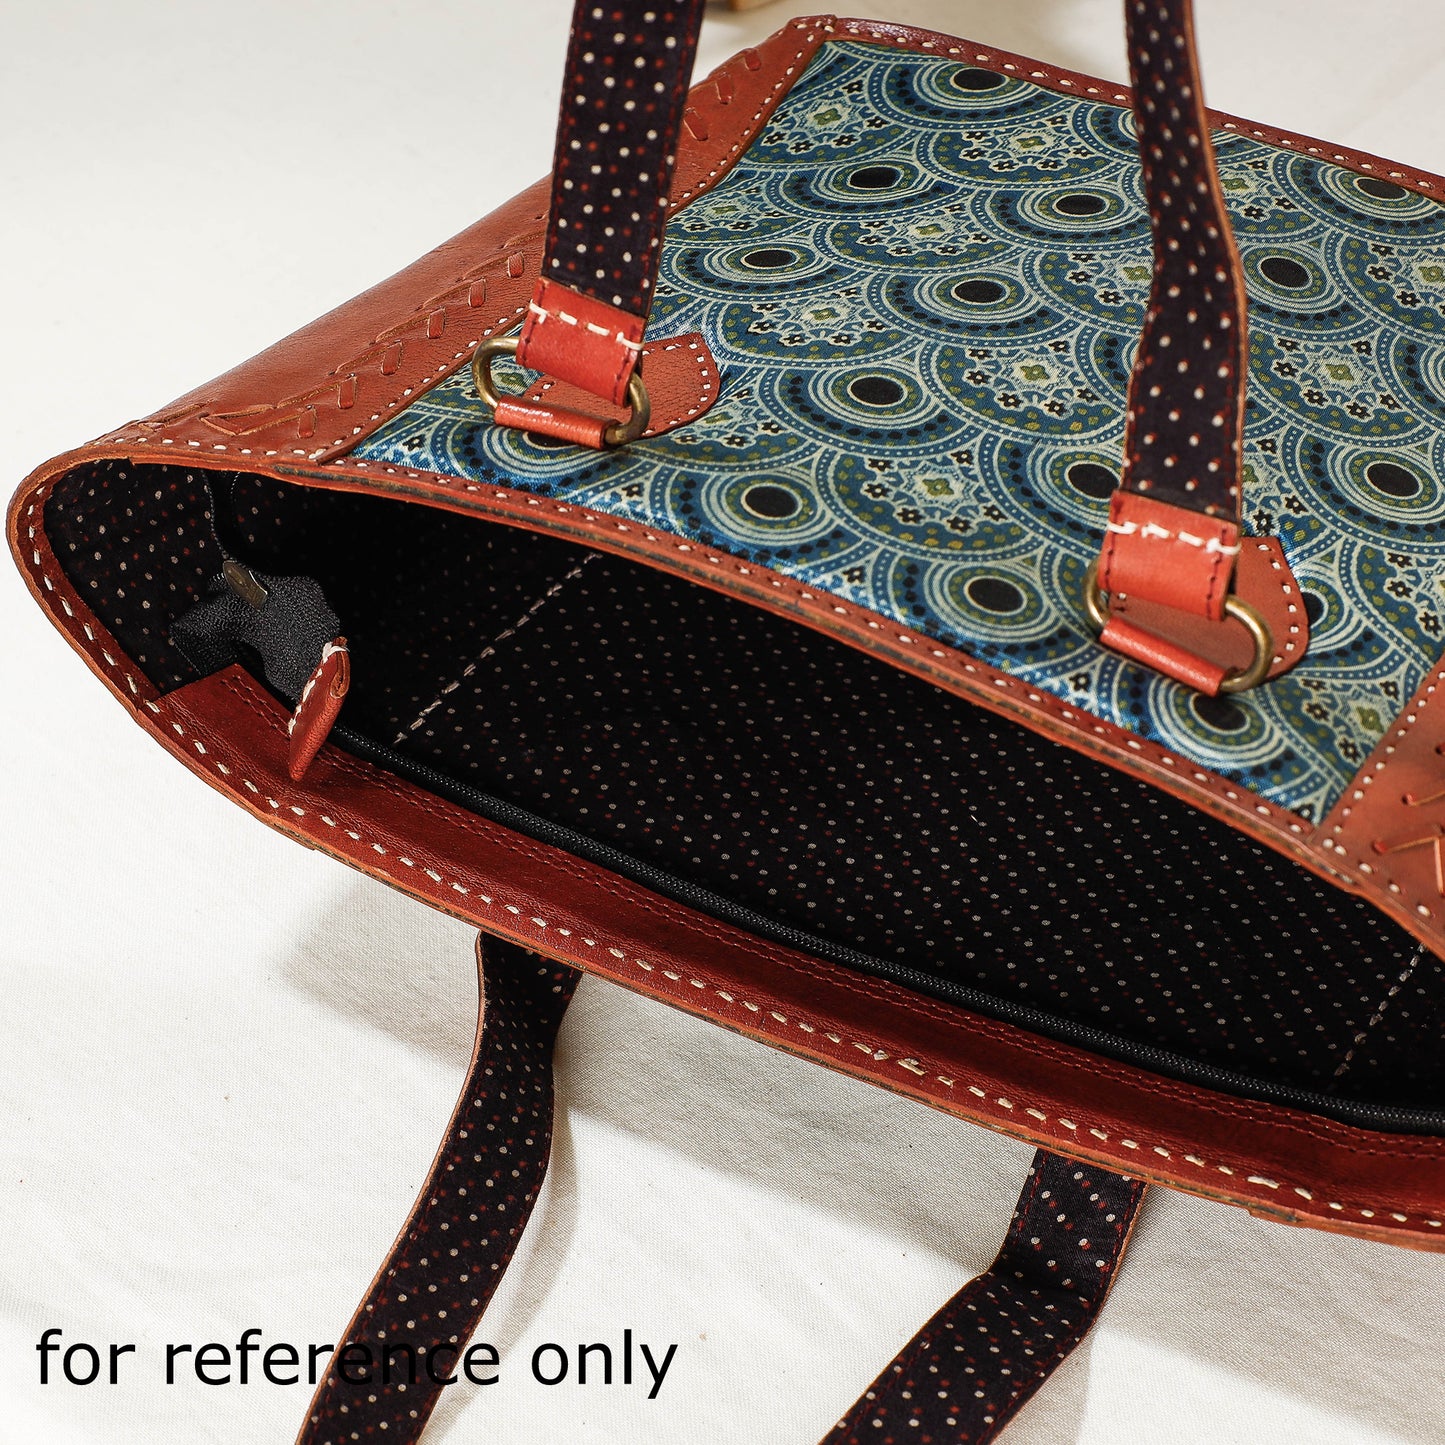 Blue - Handcrafted Kutch Jat  Embroidery Leather Shoulder Bag